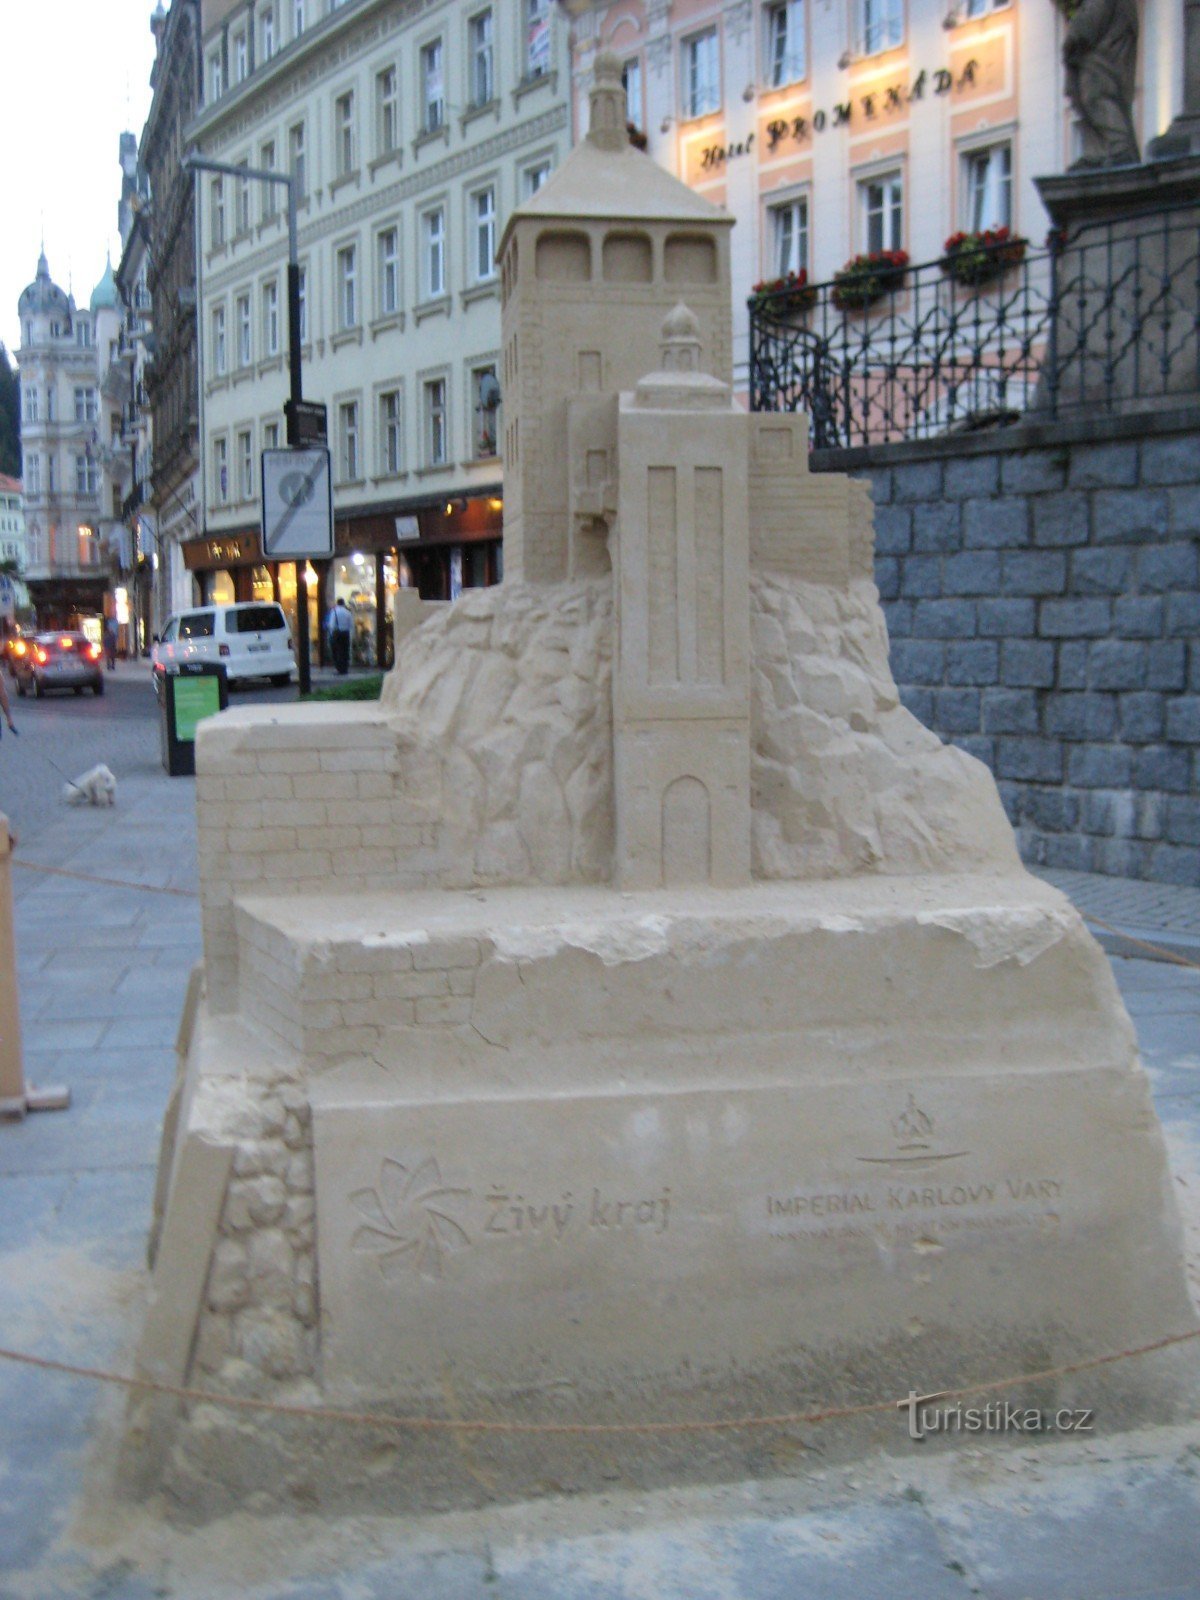 Scultura di sabbia: Torre del castello a Karlovy Vary